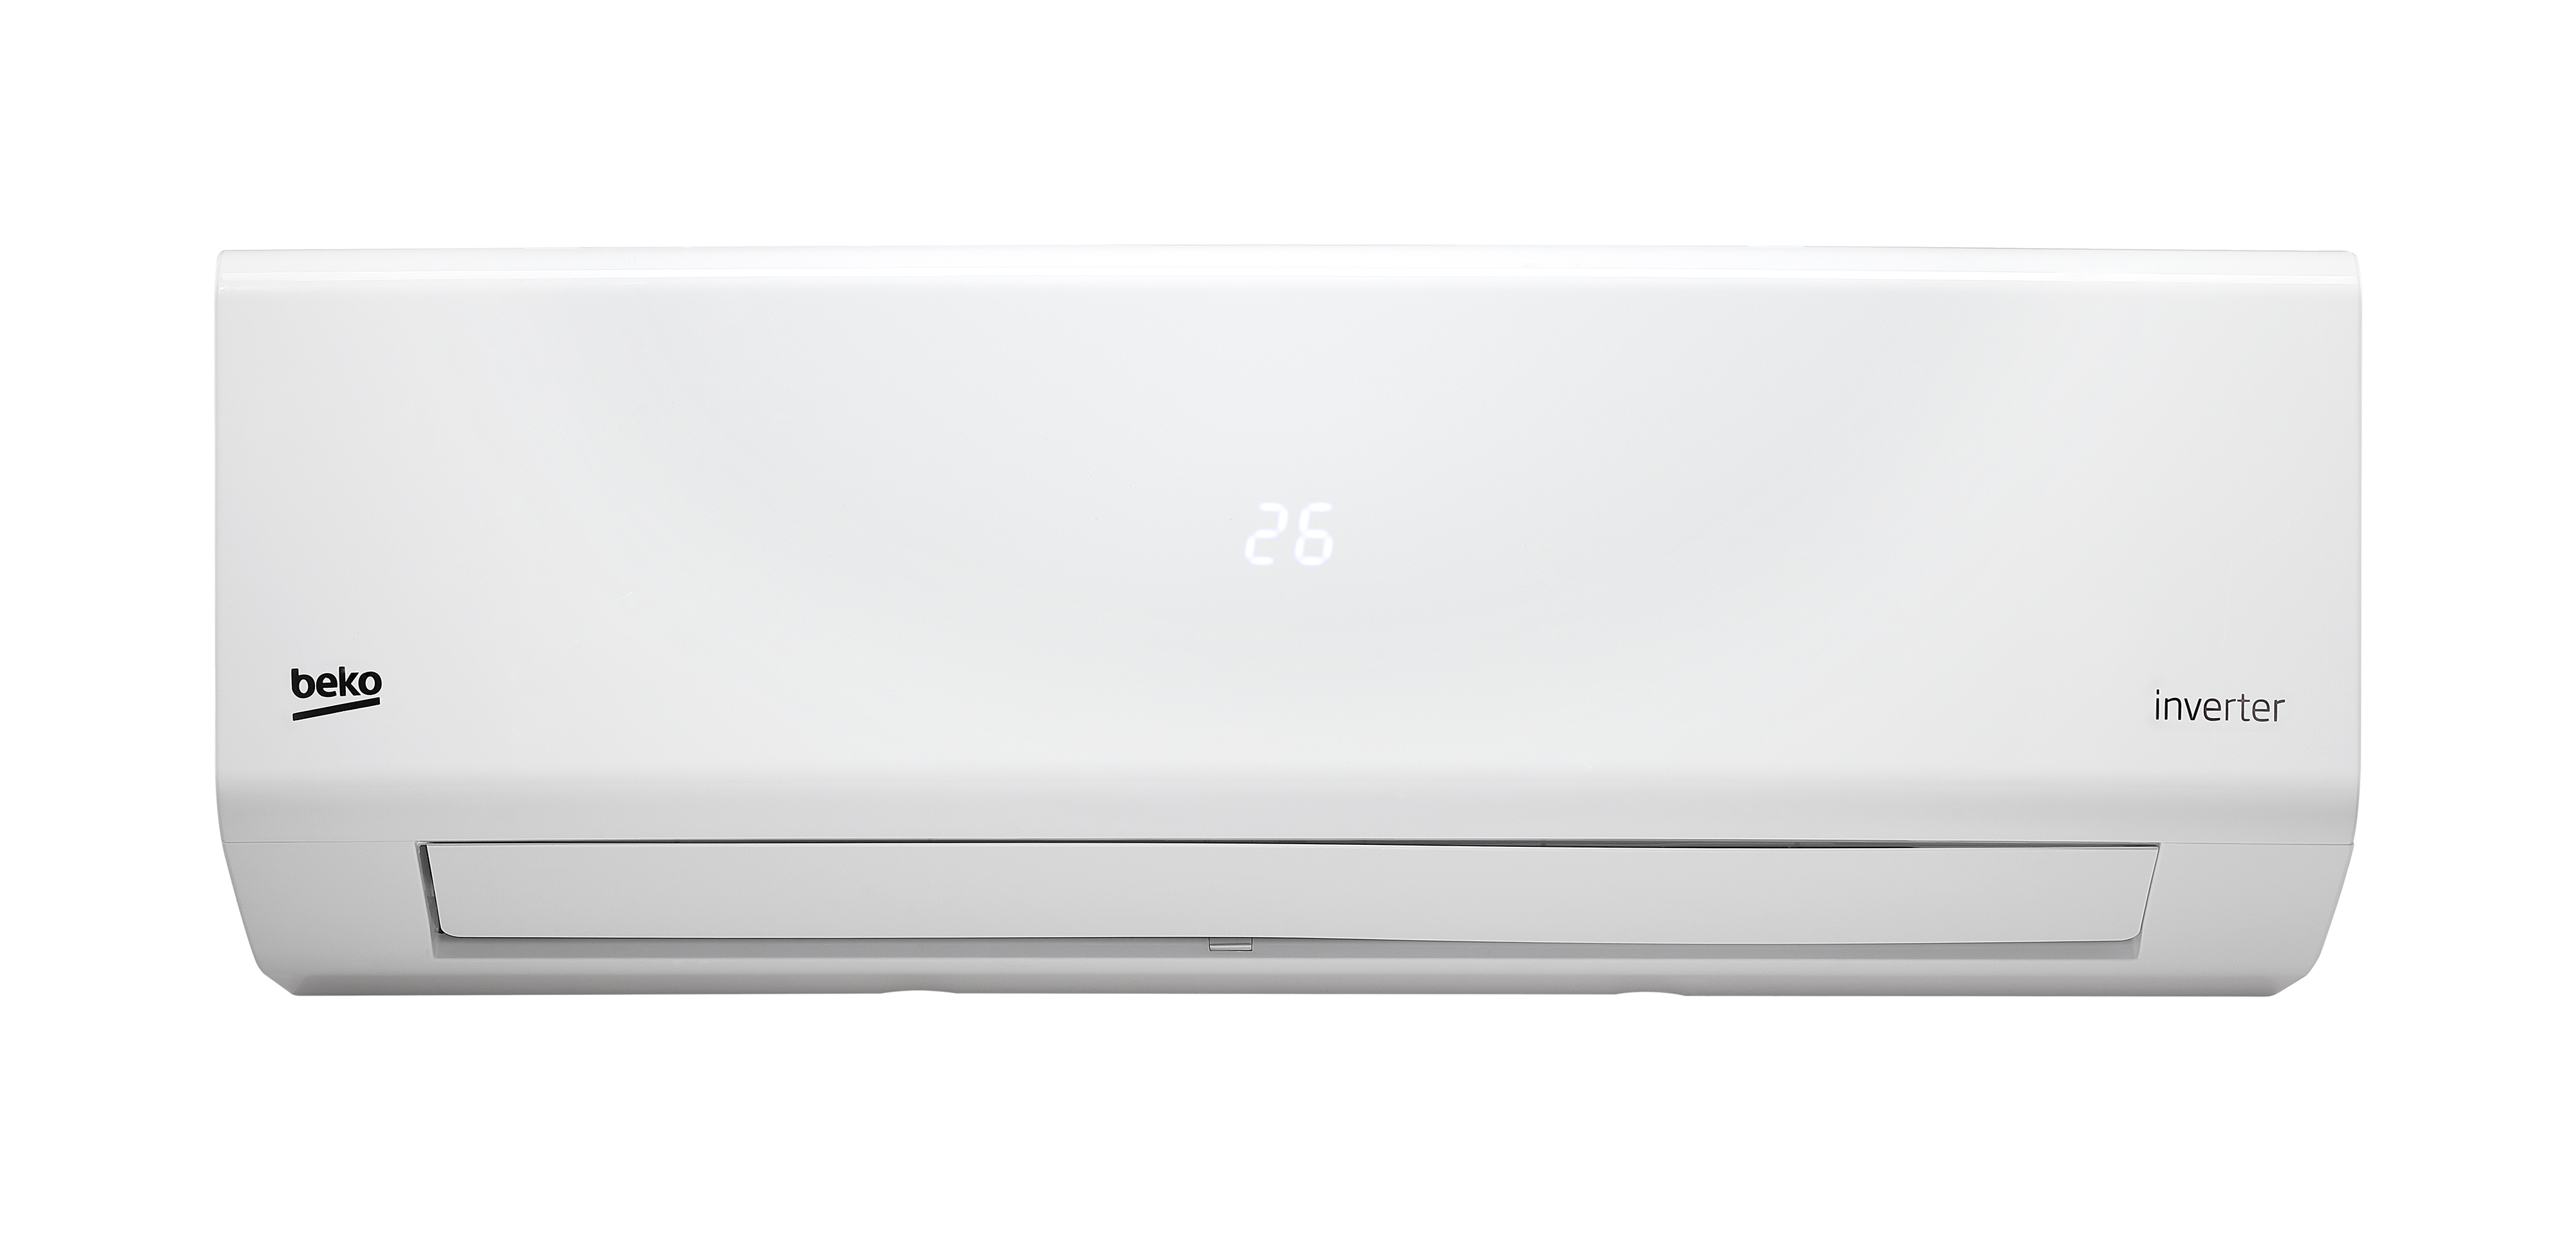 Beko air conditioner 1 ton A++- White